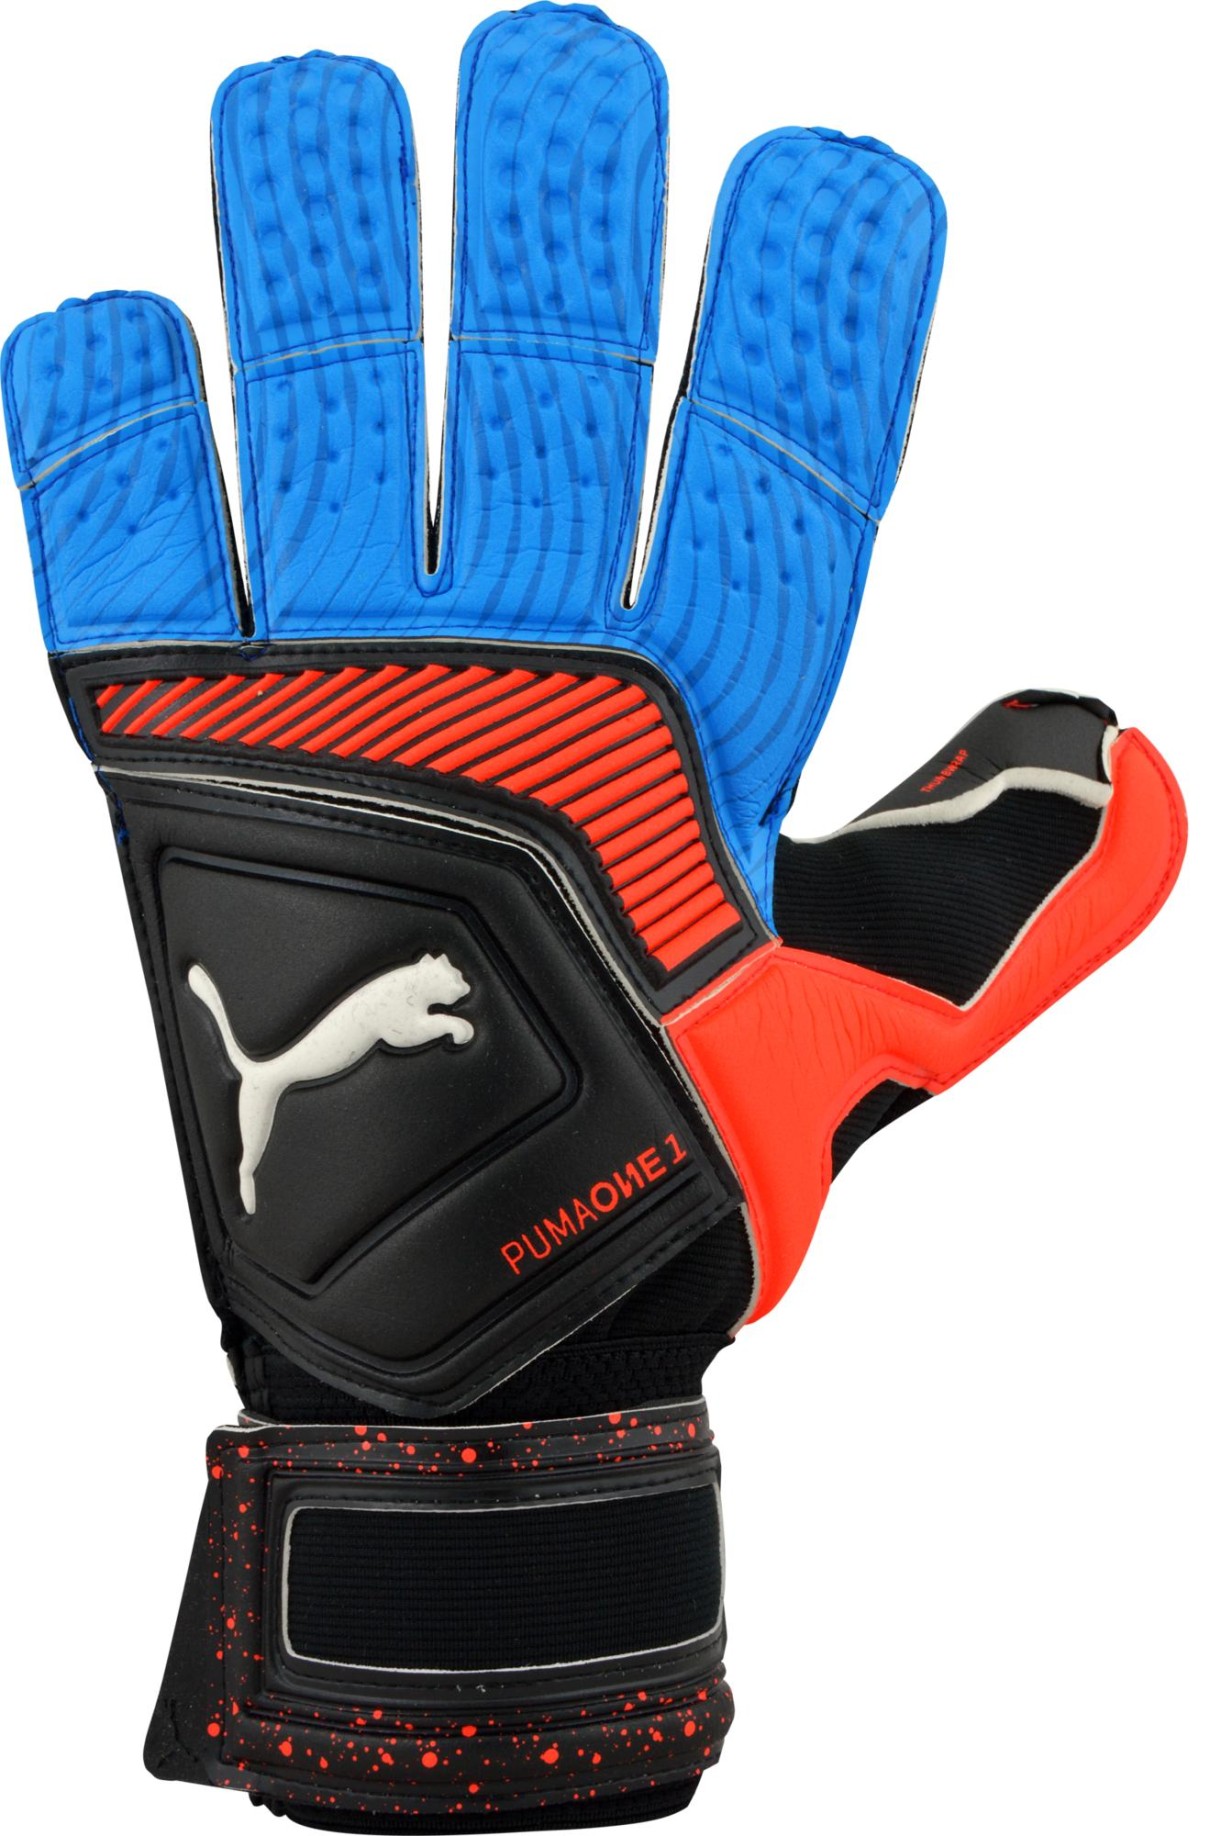 new puma gloves